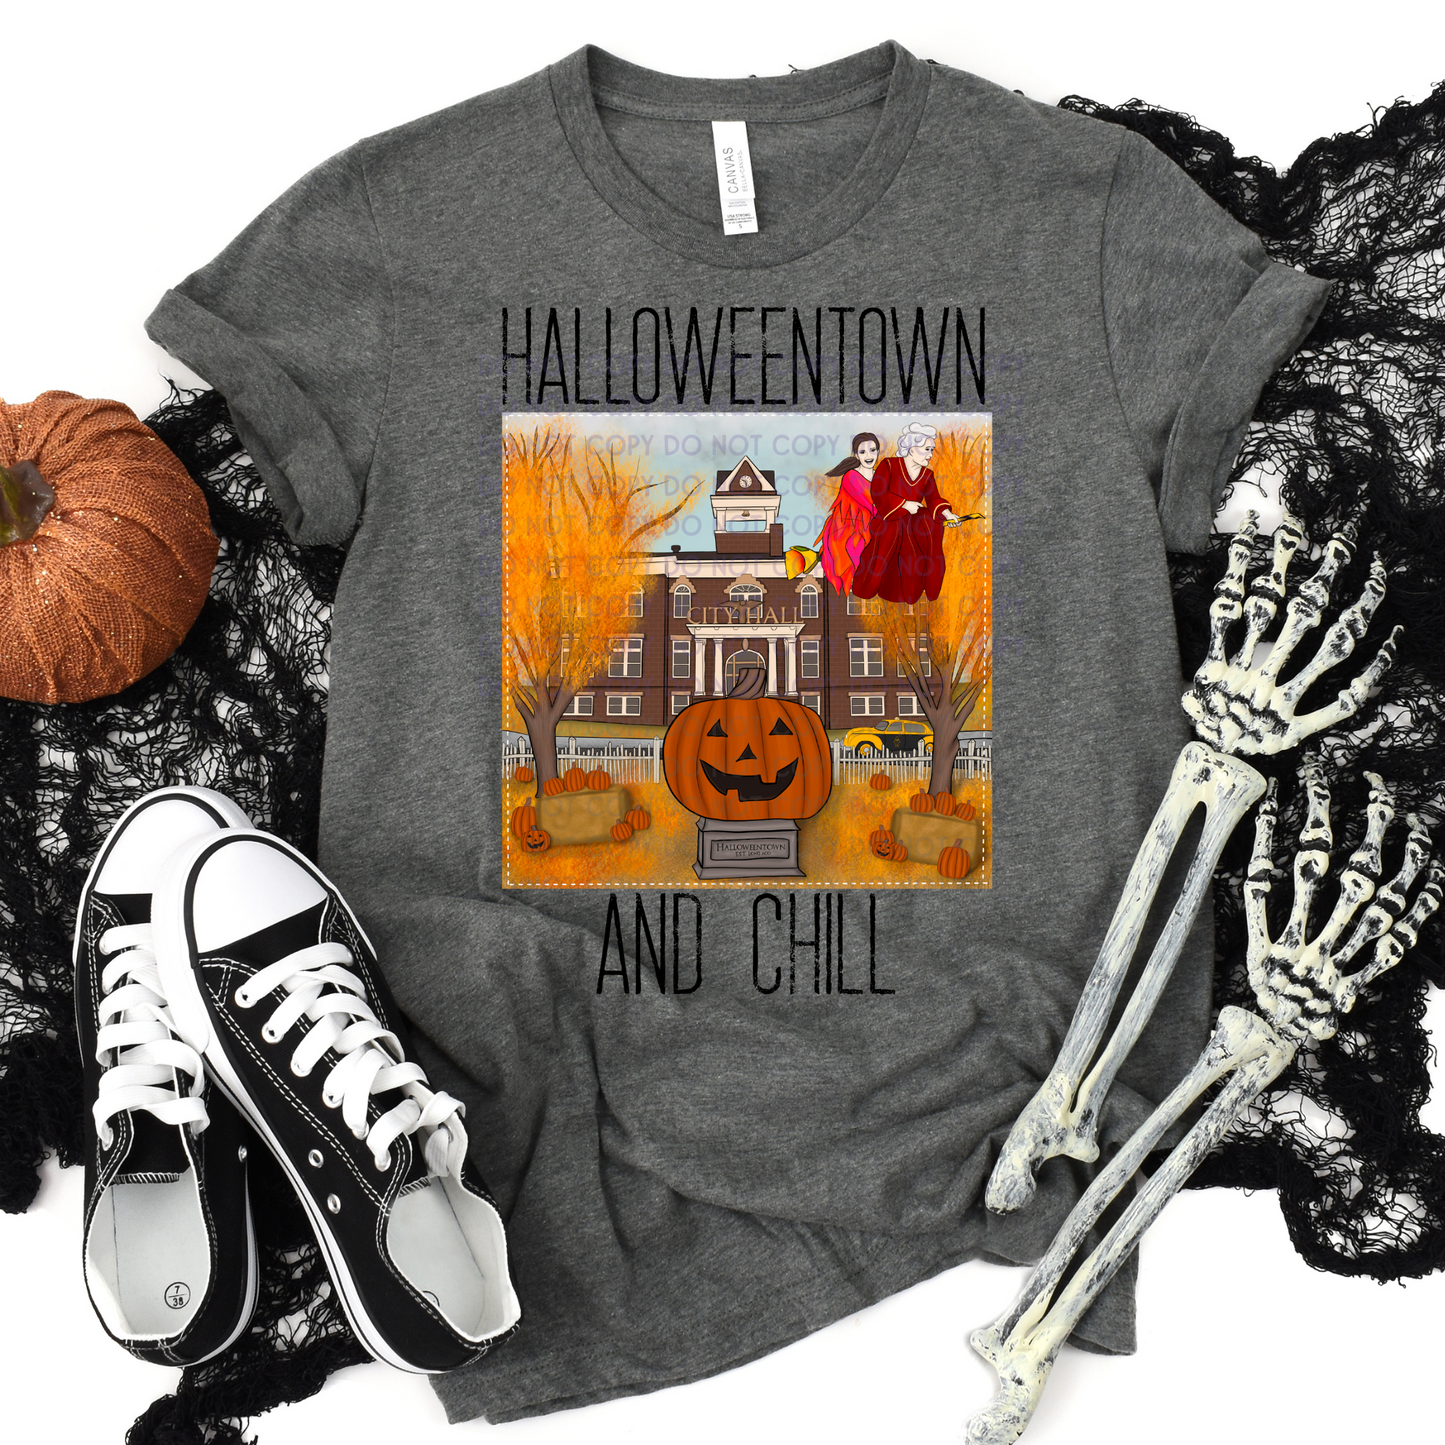 Halloweentown - DTF TRANSFER